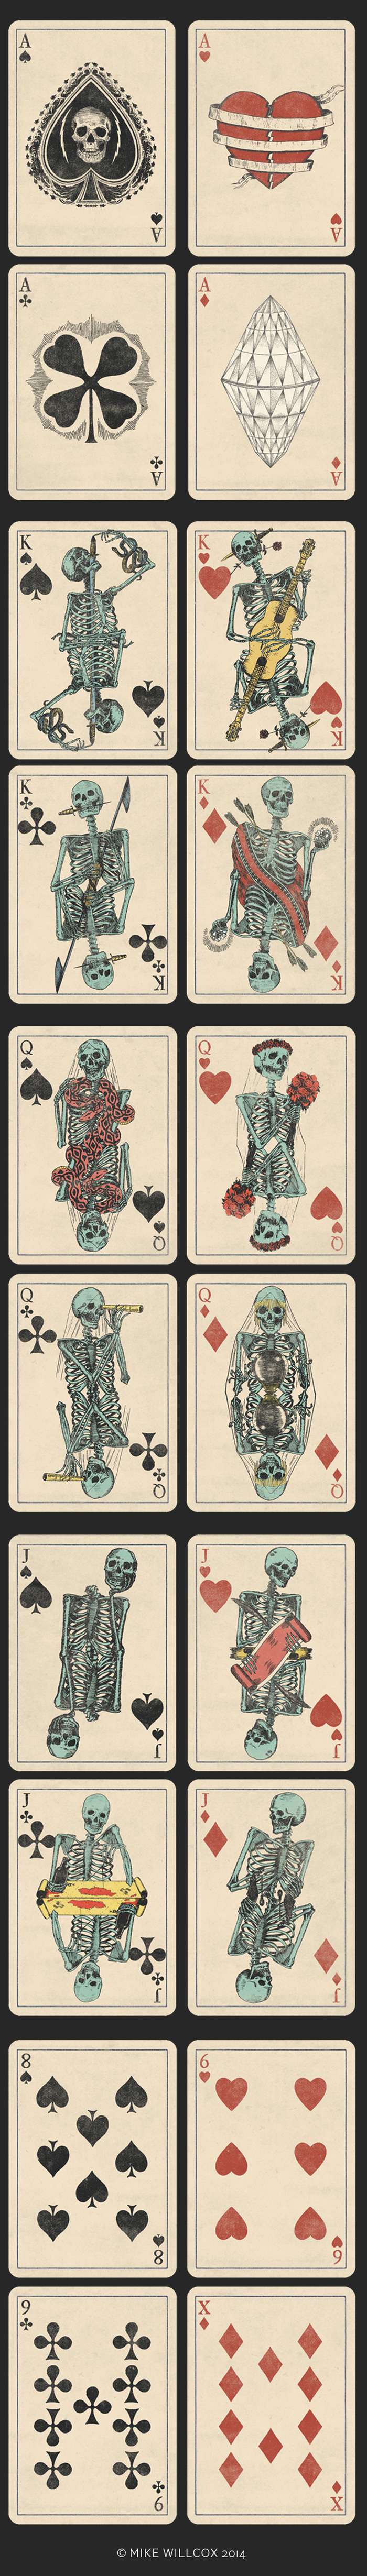 Skull Art Designs by Cartamundi Casino Quality Single Deck Poker PLAYING CARDS 